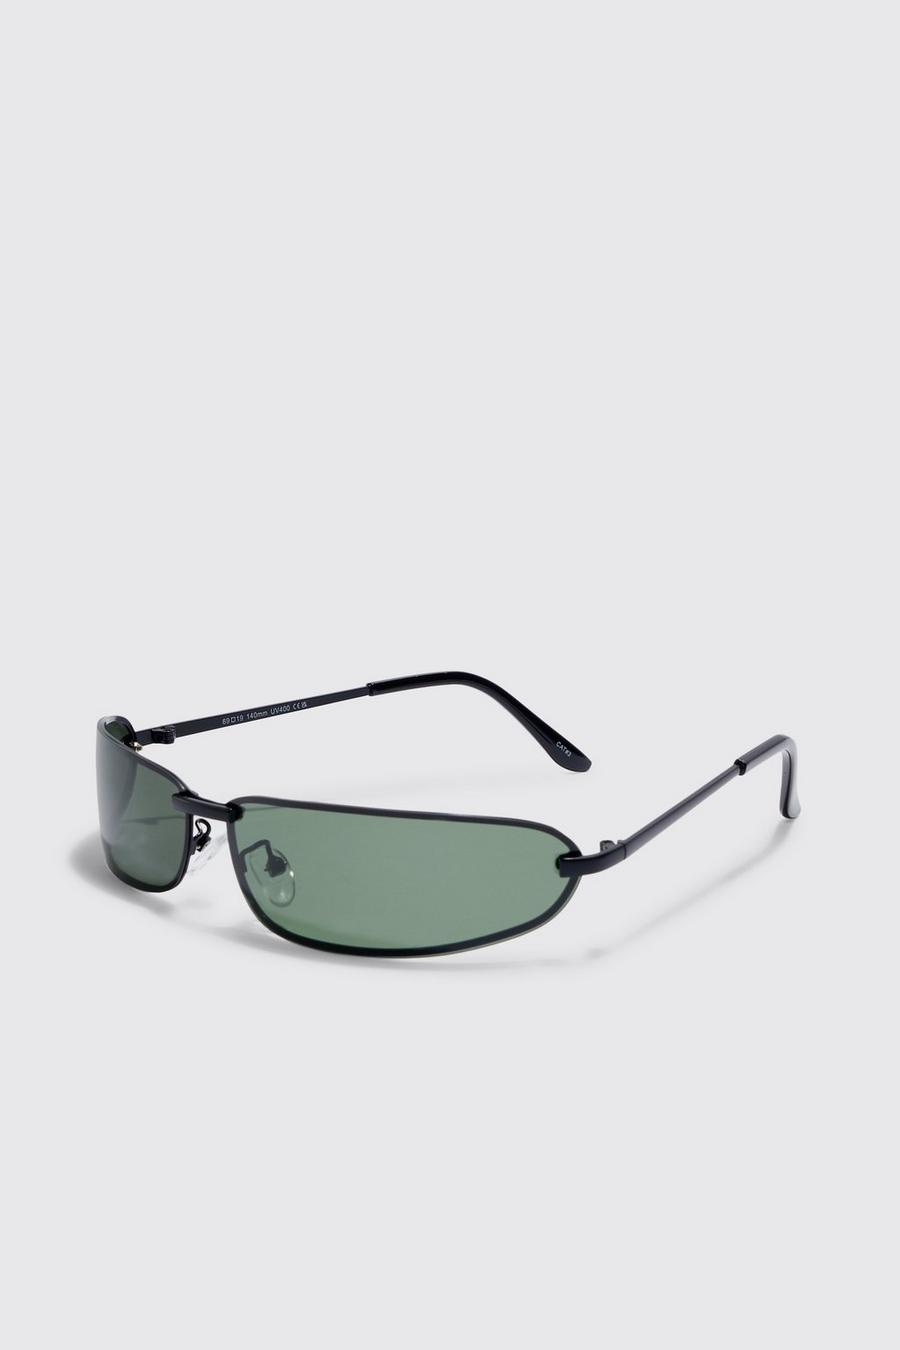 Black Wrap Lens Metal Sunglasses